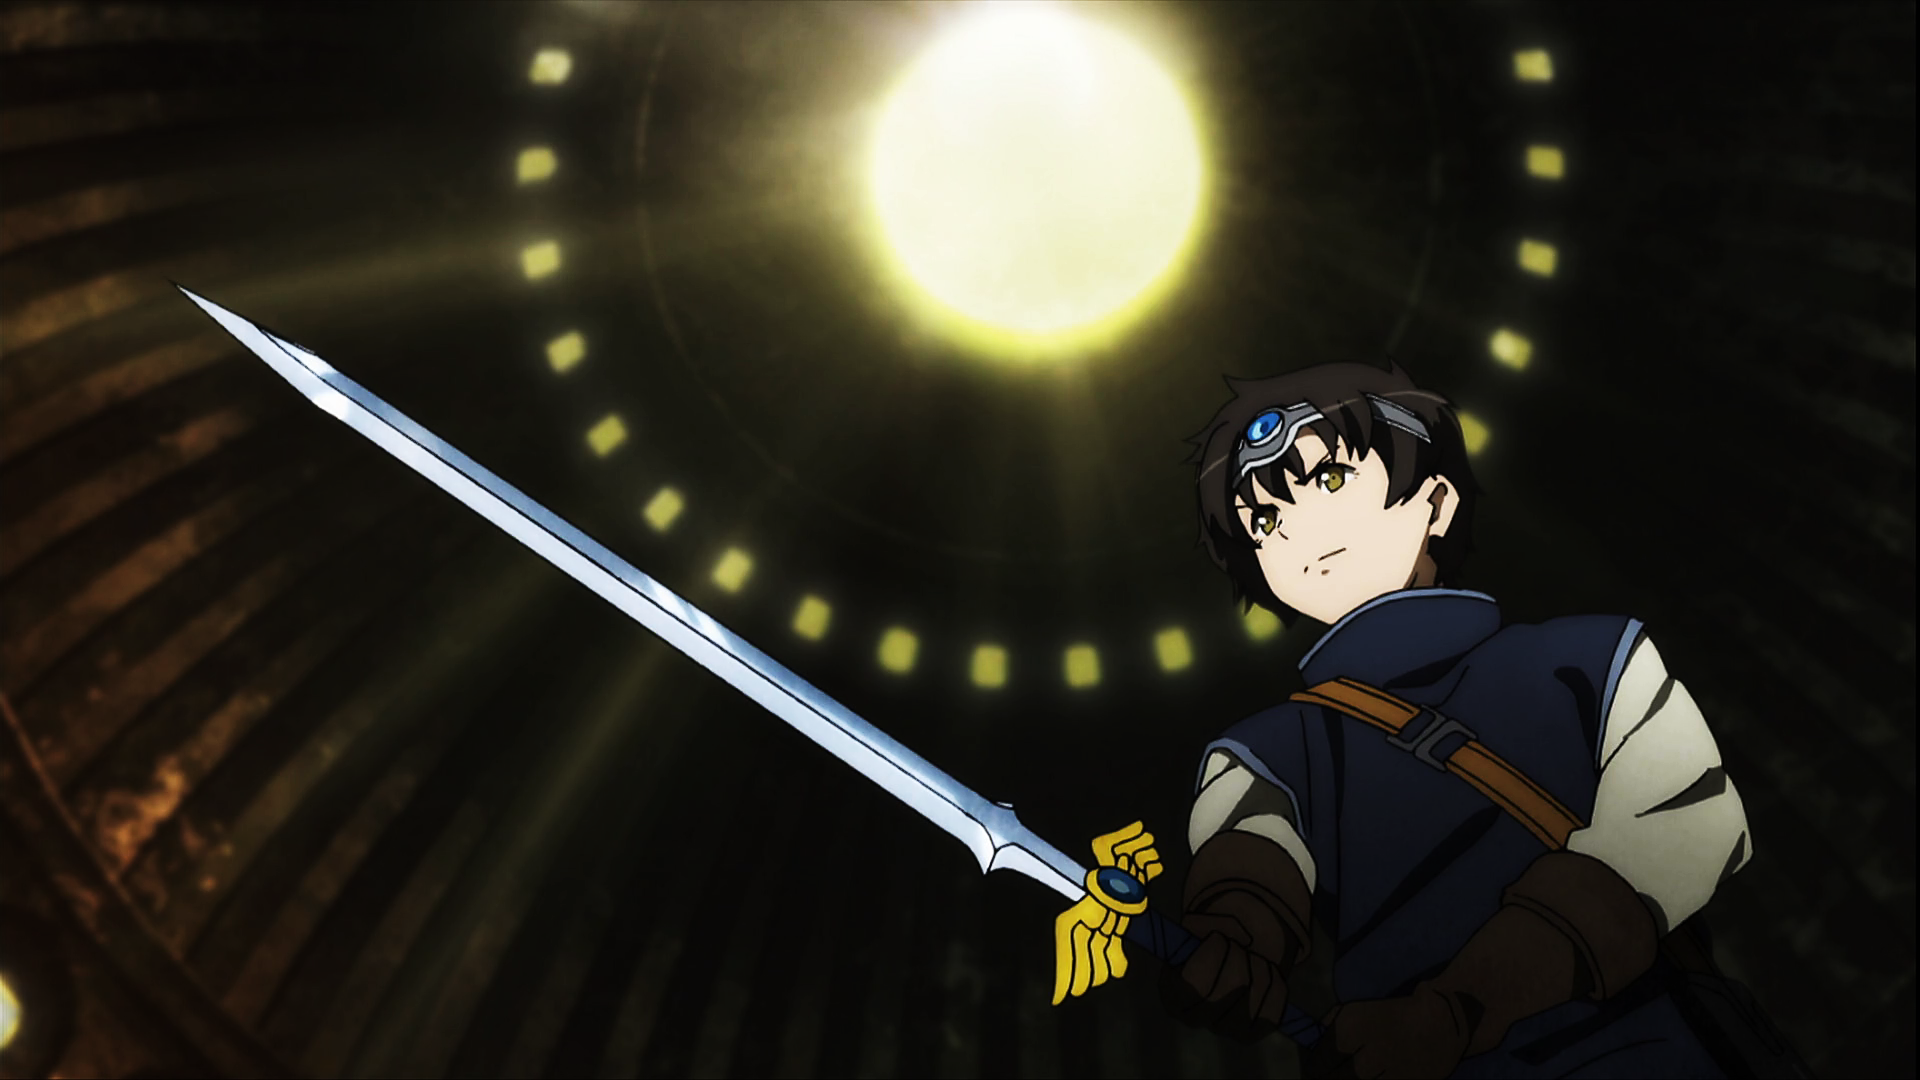 saber king of heroes anime